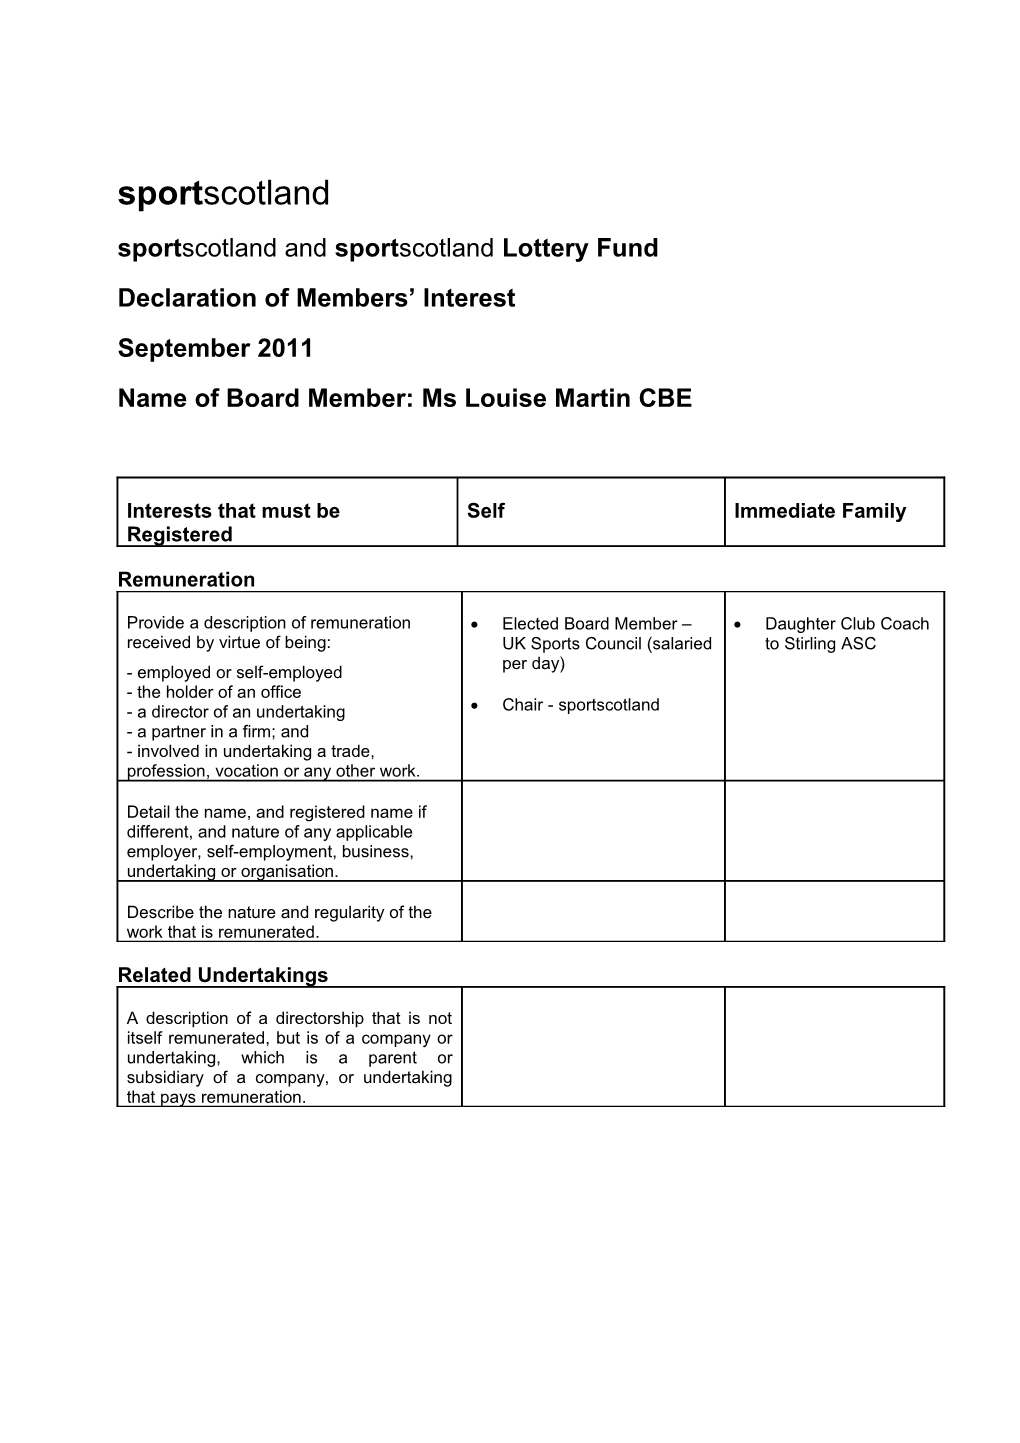 Sportscotland and Sportscotland Lottery Fund